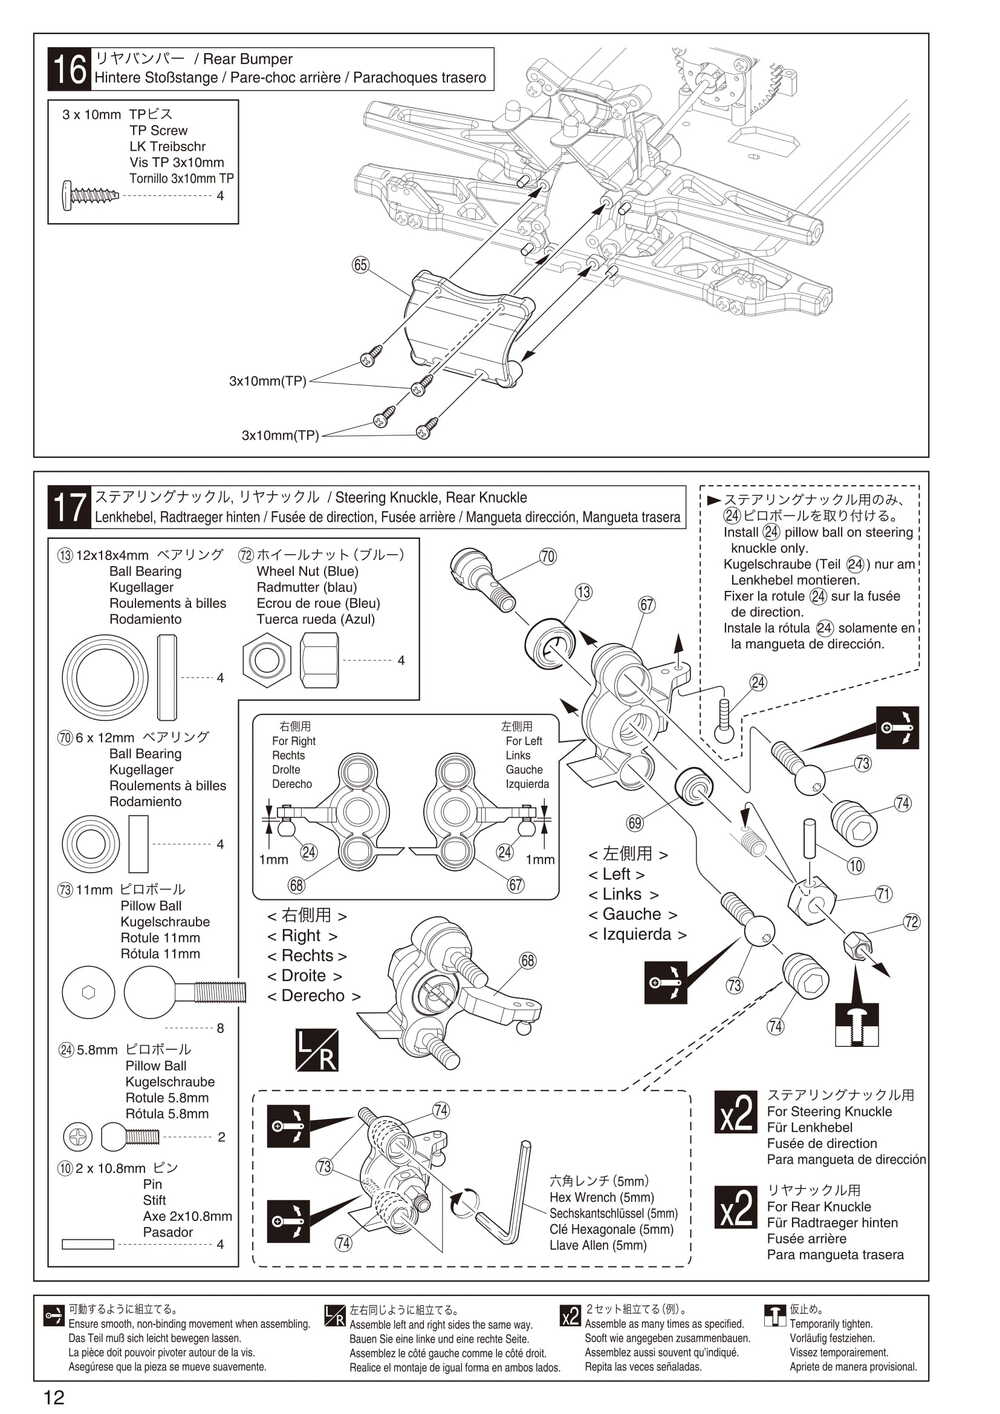 Kyosho - 31096F DBX - Manual - Page 12